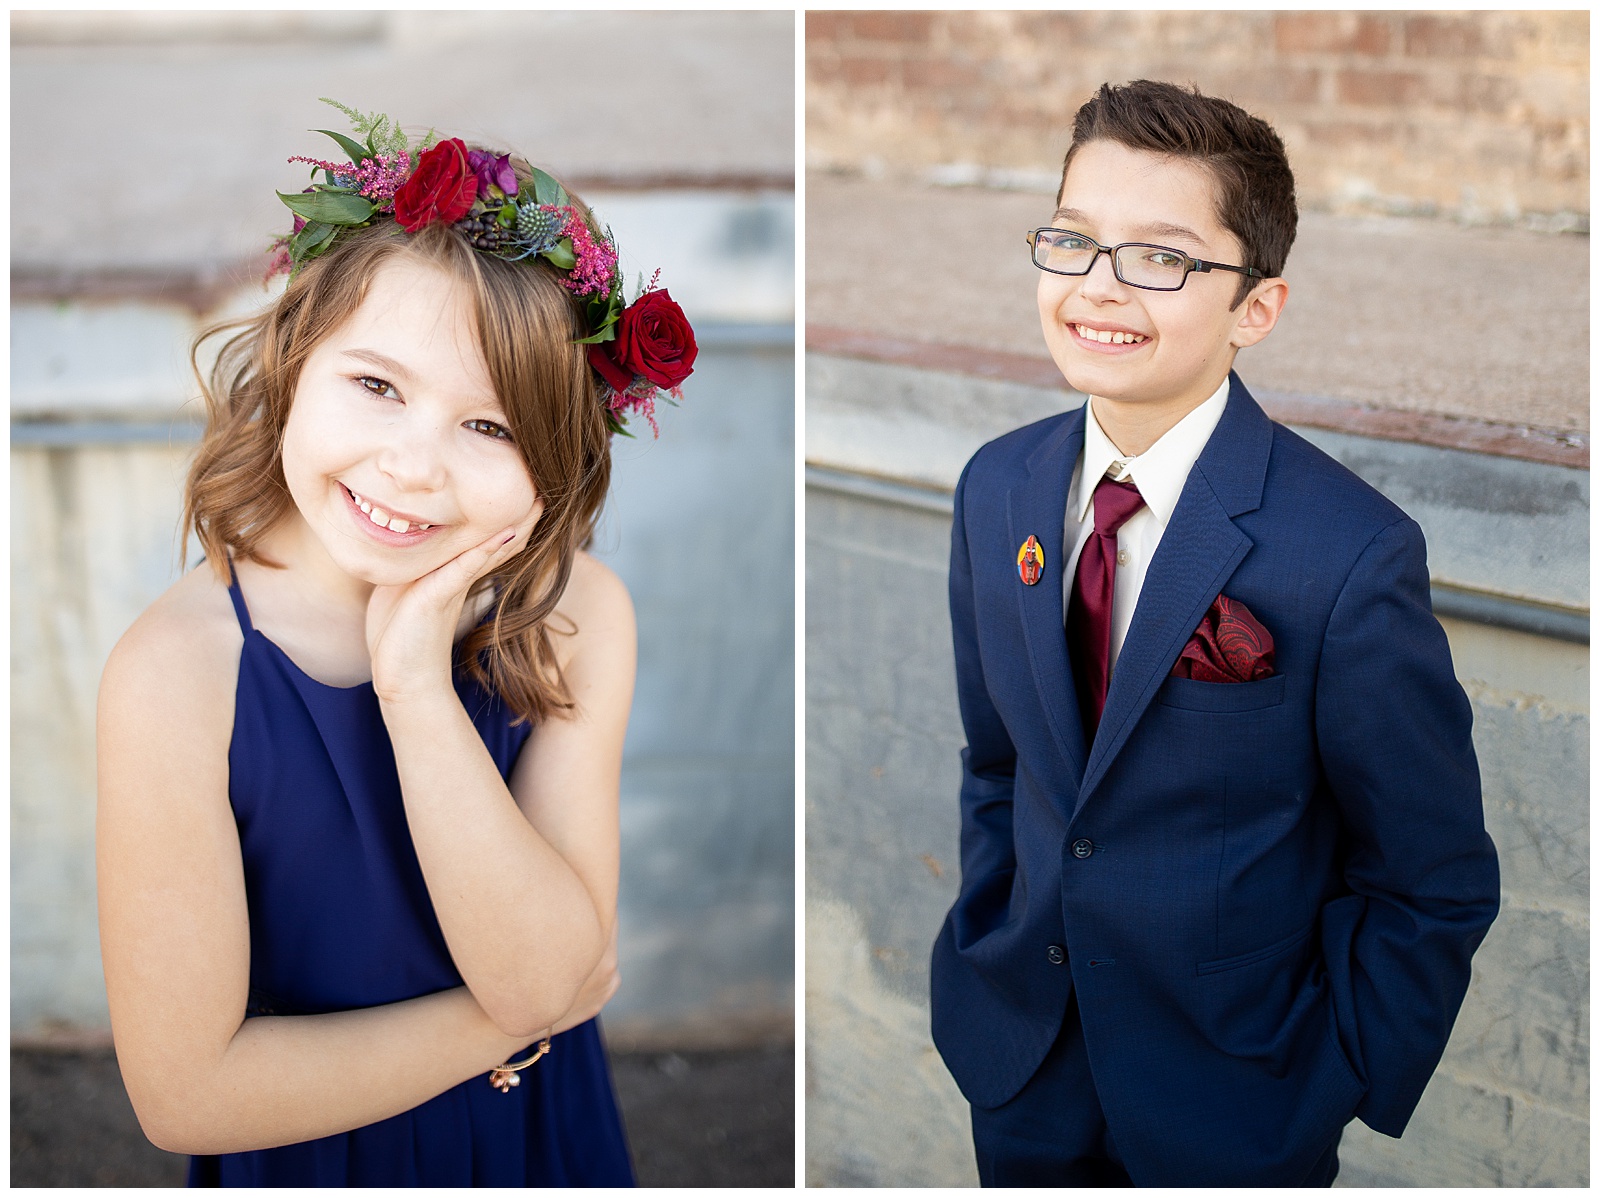 Children photography at wedding downtown phoenix 